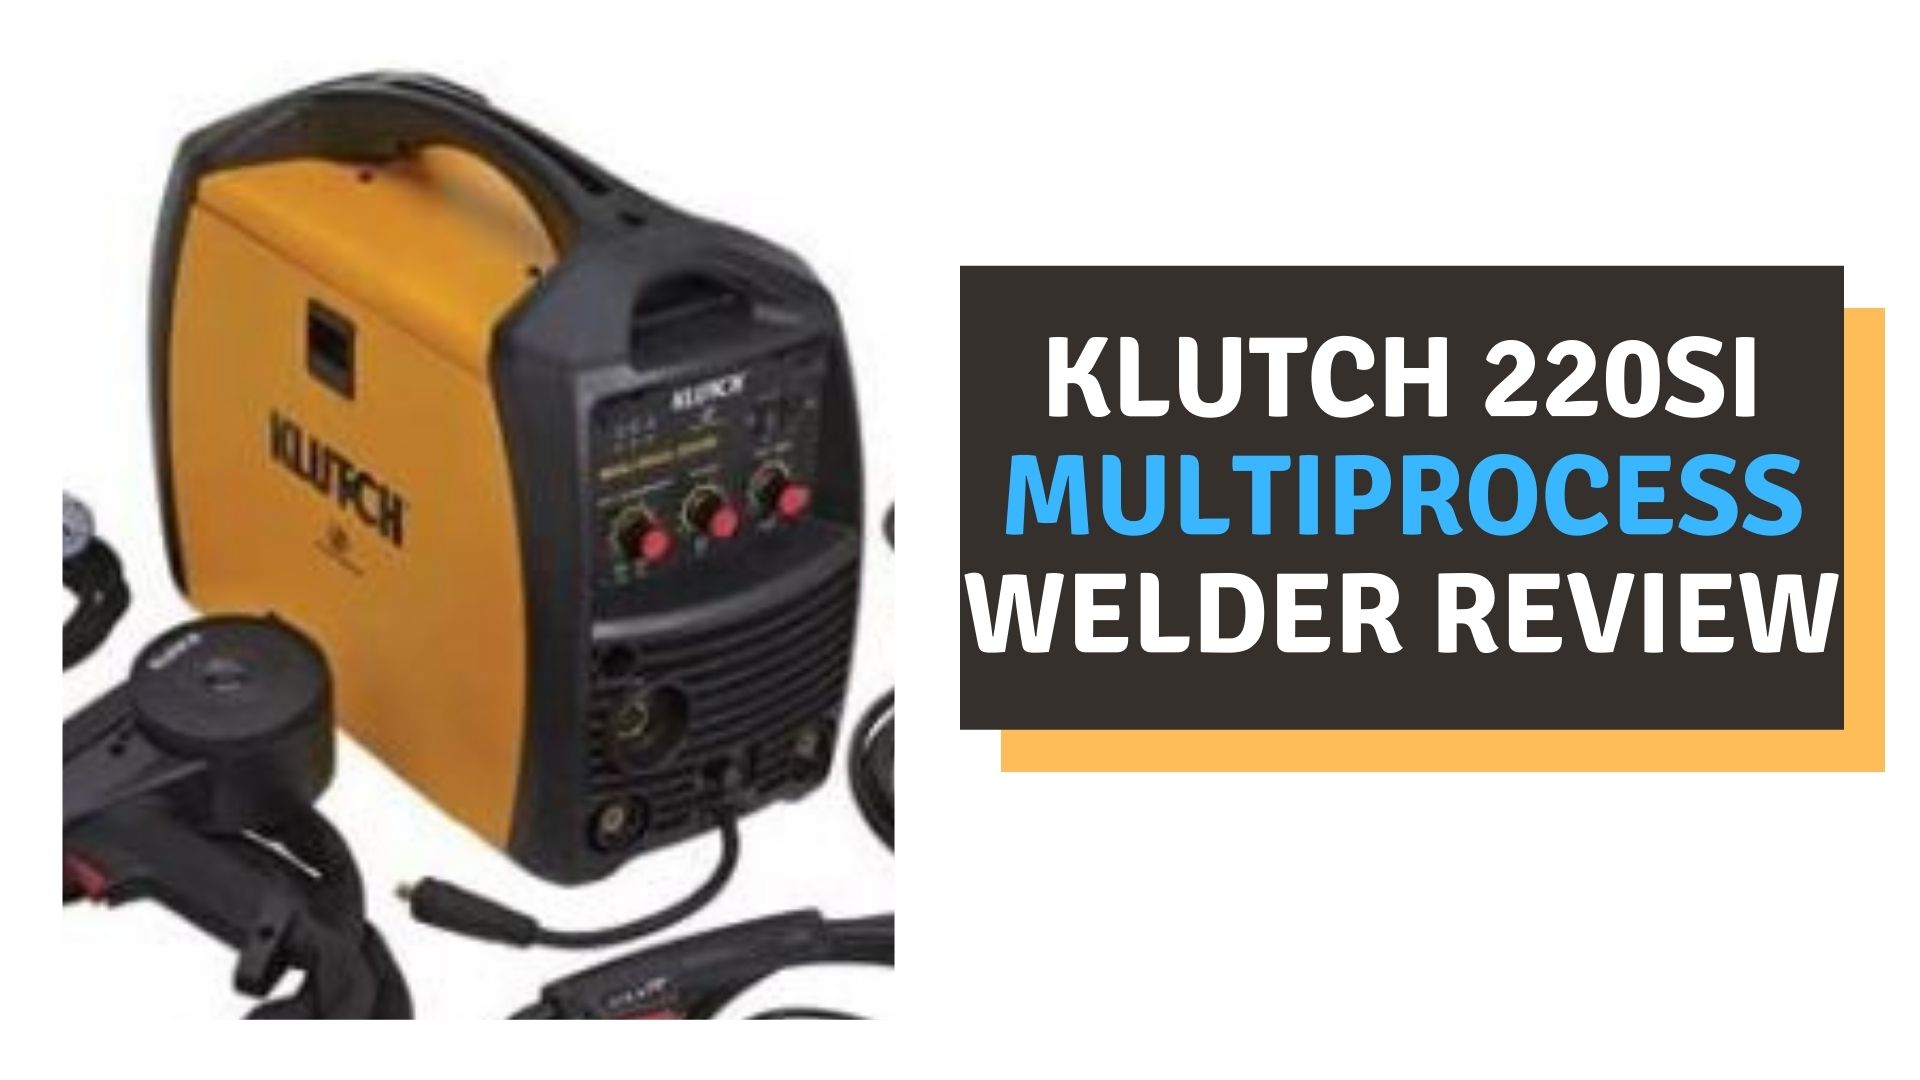 Klutch 220si Multiprocess Welder Review (2022)